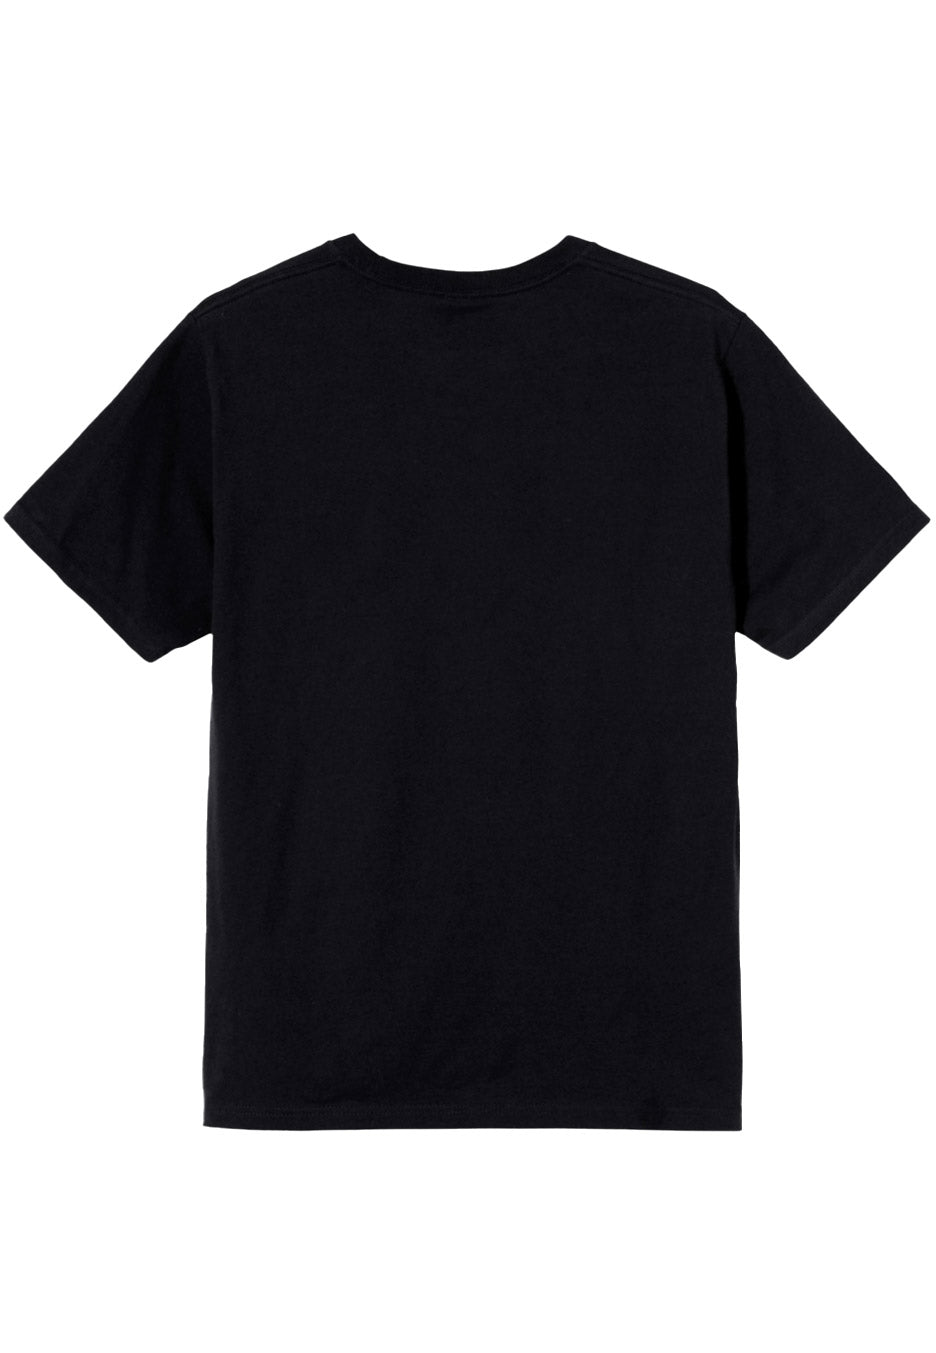 Chelsea Grin - Origin Of Sin - T-Shirt | Neutral-Image